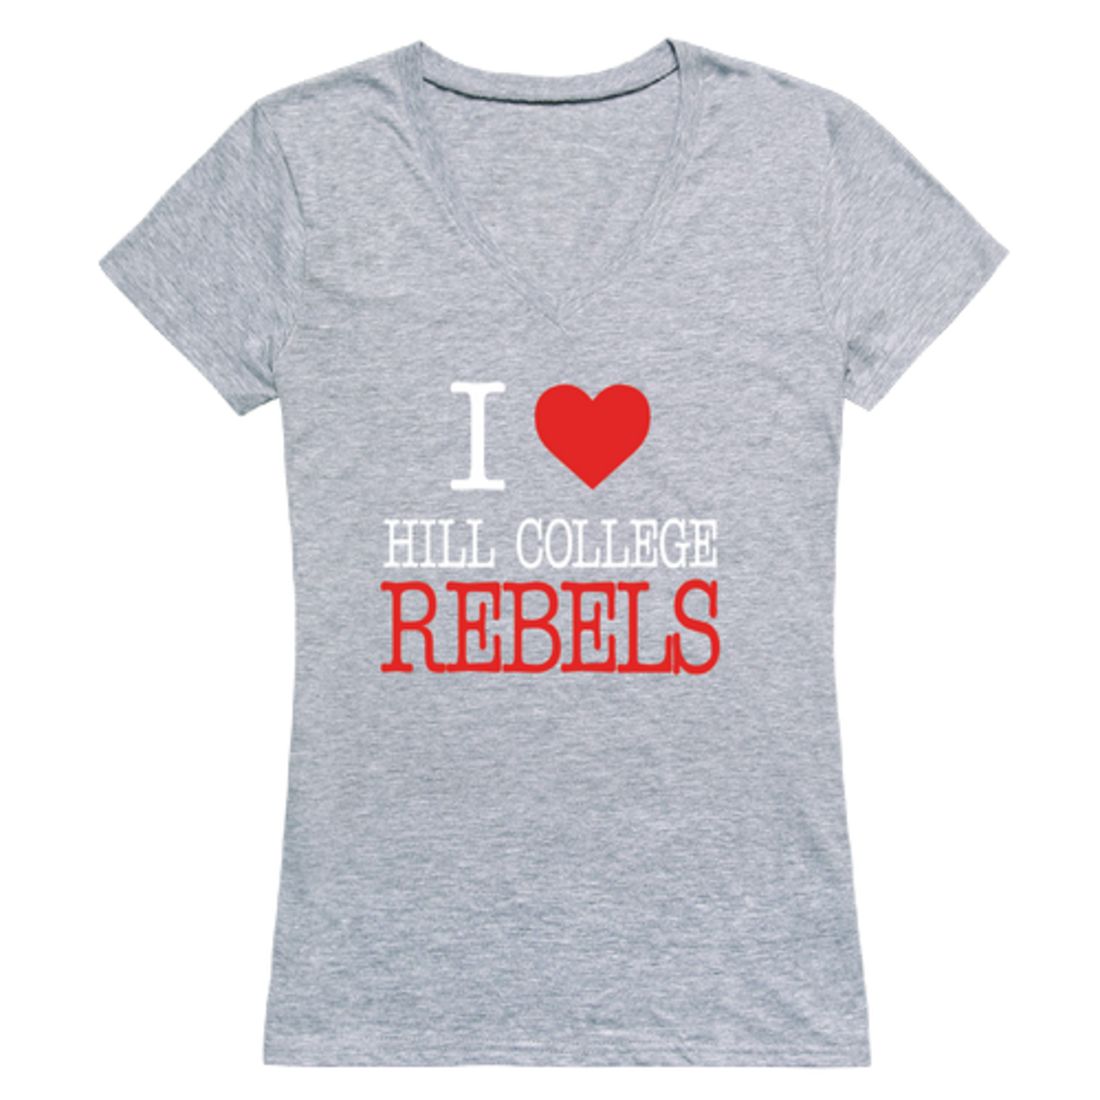 I Love Hill College Rebels Womens T-Shirt Tee